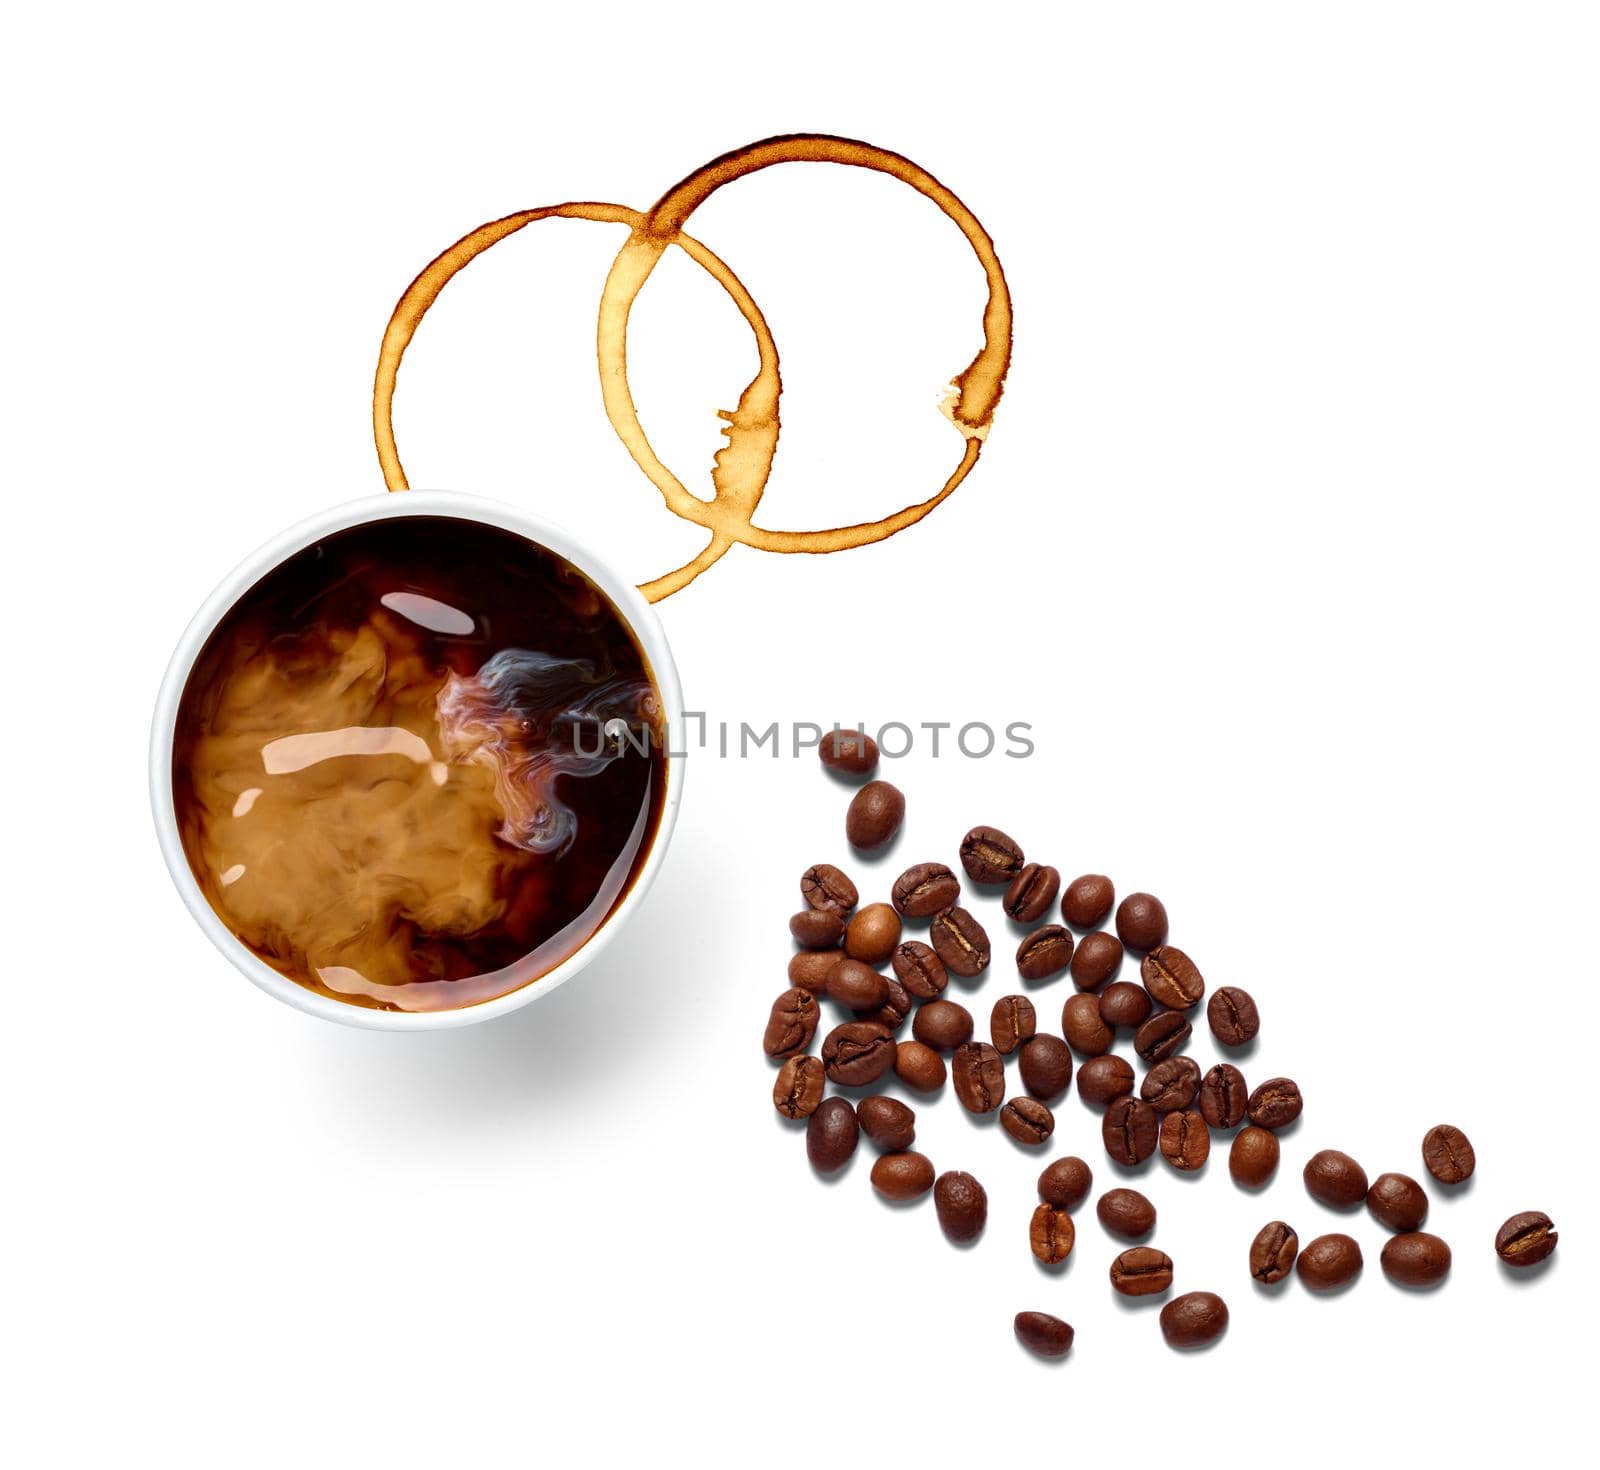 coffee cup drink espresso cafe mug cappuccino aroma mug breakfast hot black beverage morning closeup by Picsfive